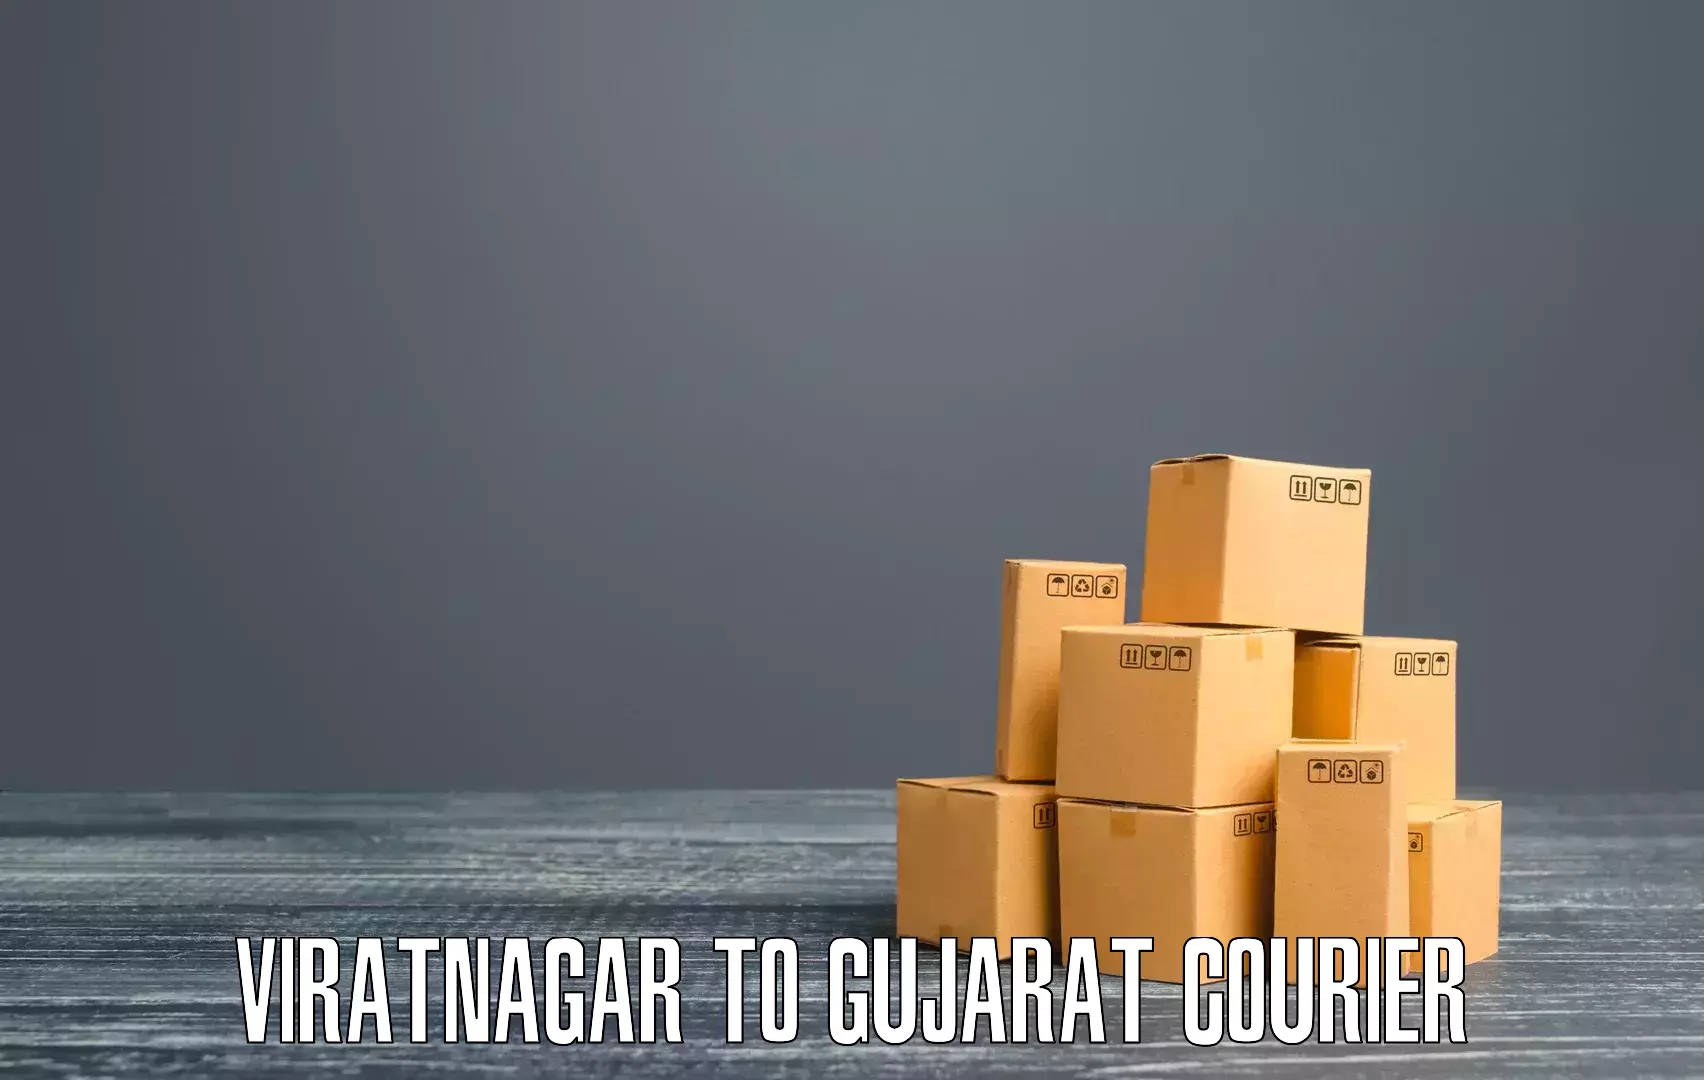 Budget-friendly shipping Viratnagar to Gujarat